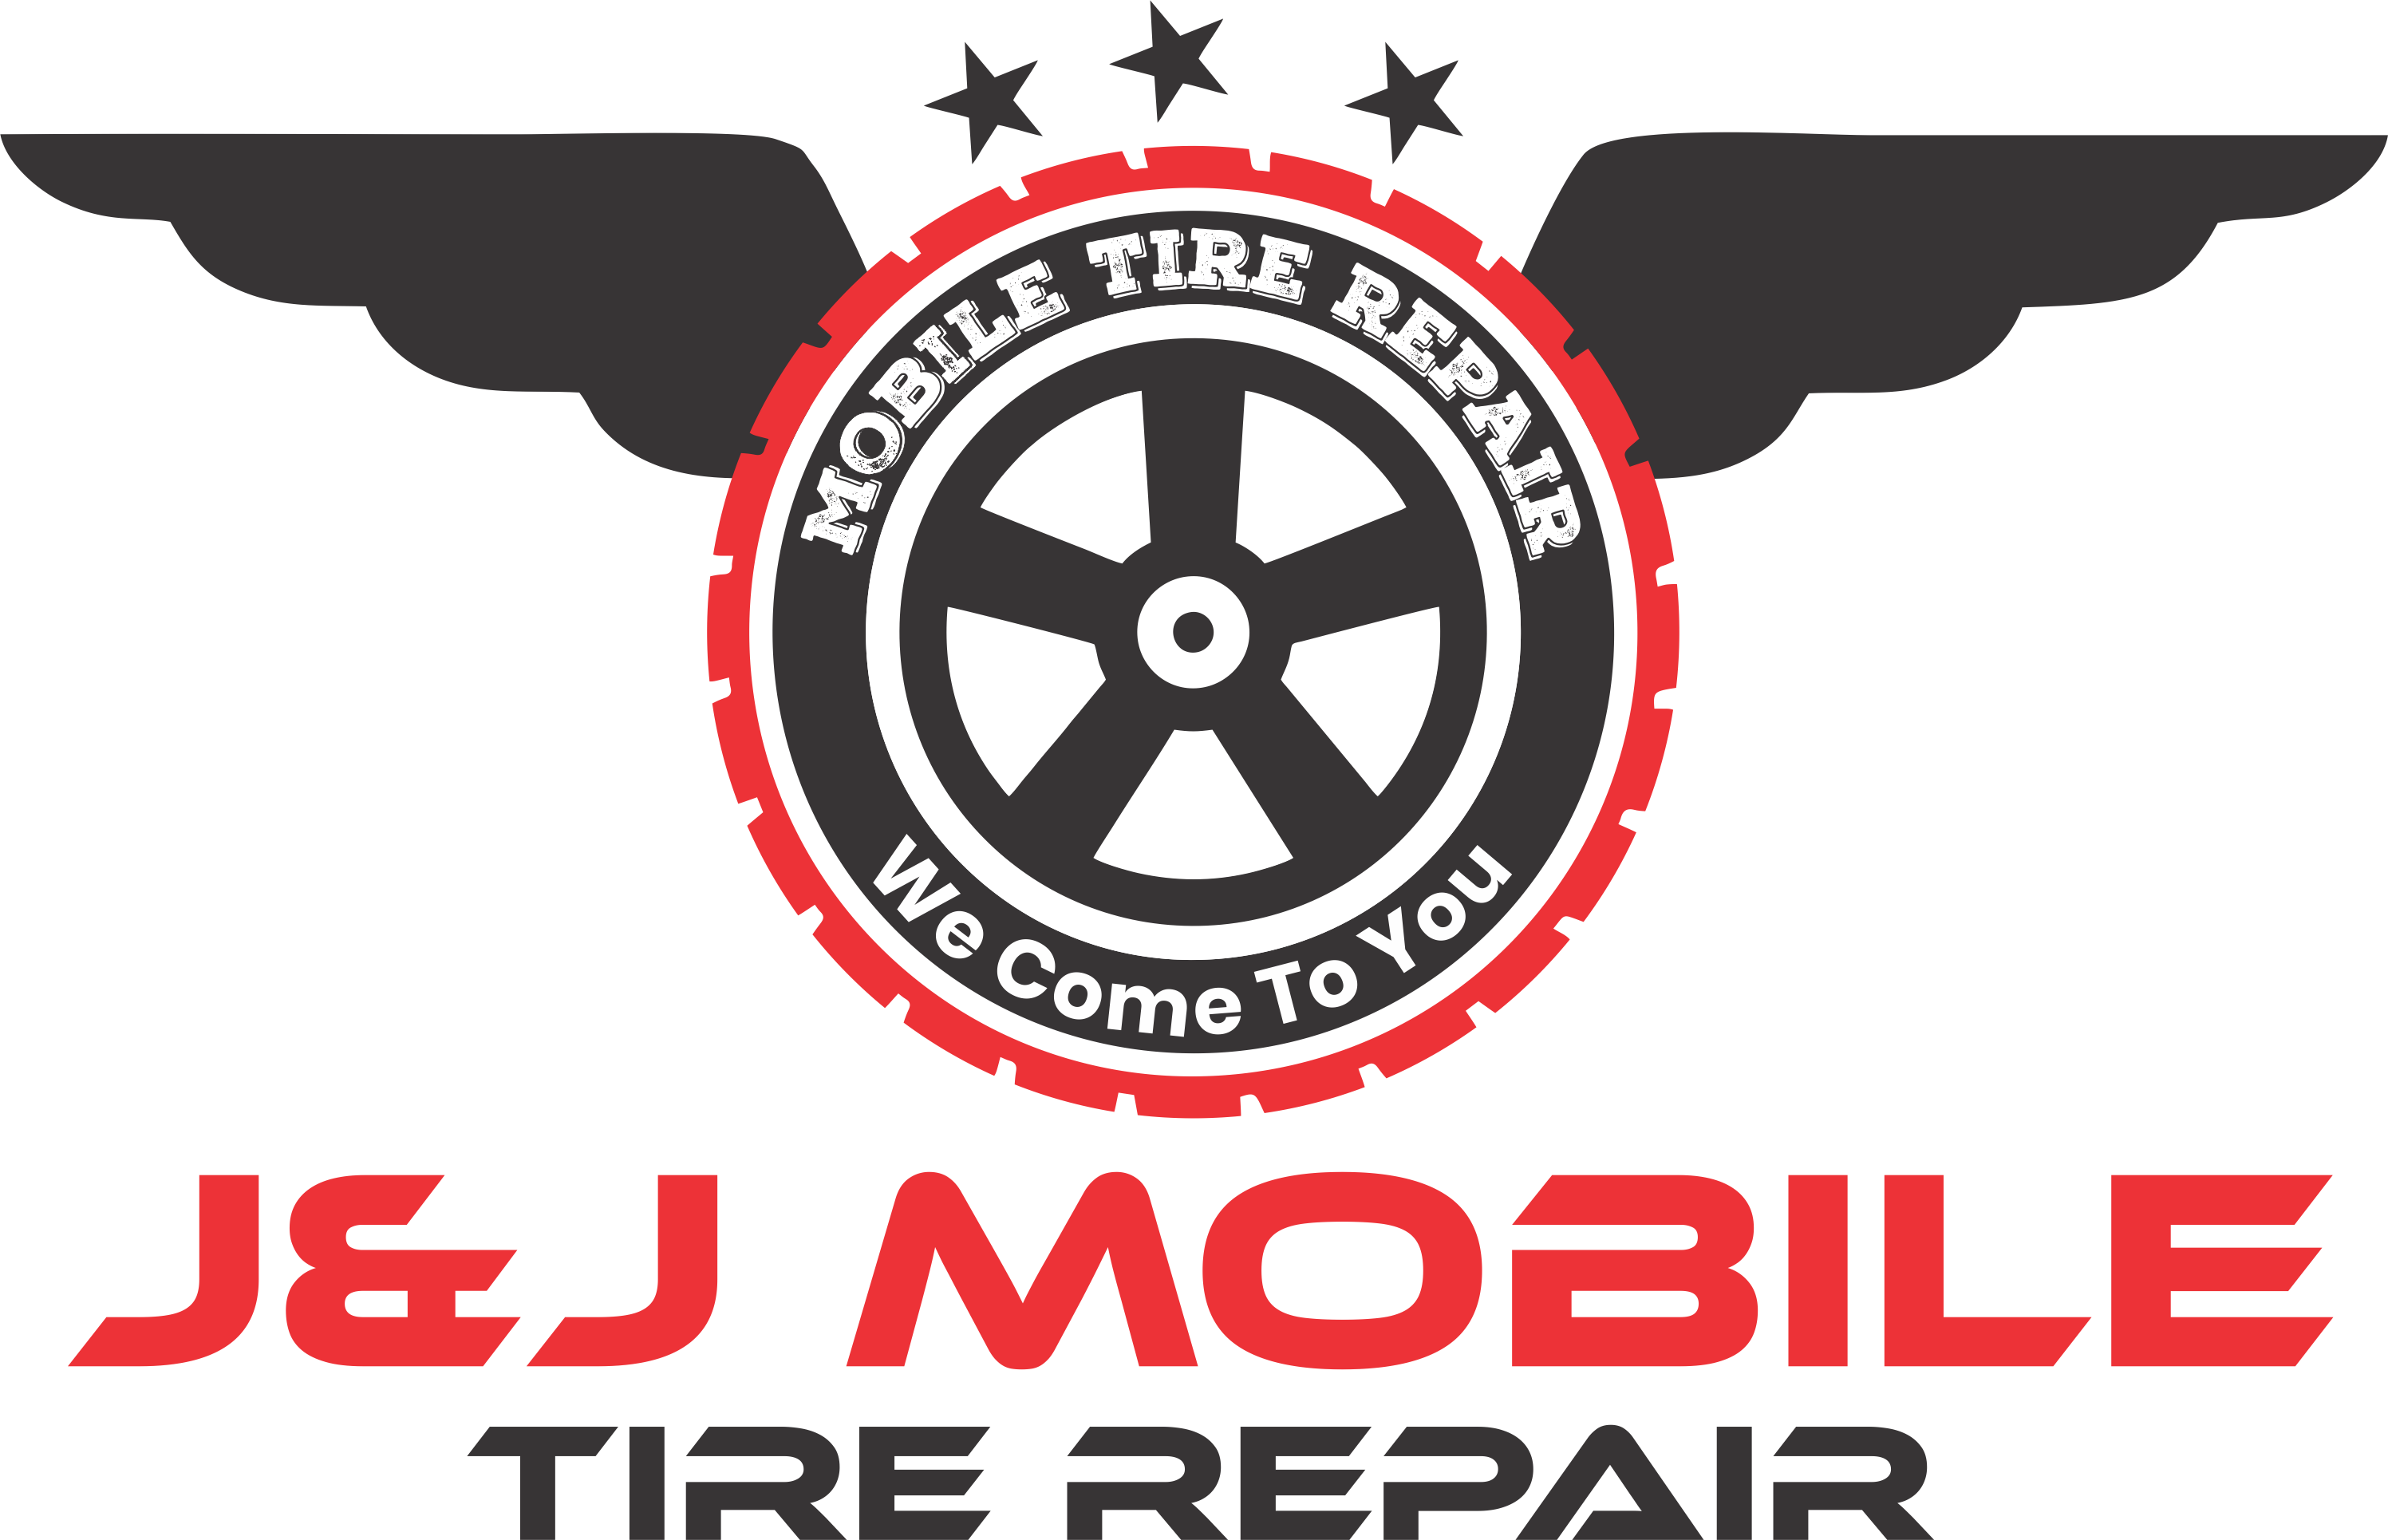 Welcome to J&J Mobile Tire Repair in Las Vegas, NV